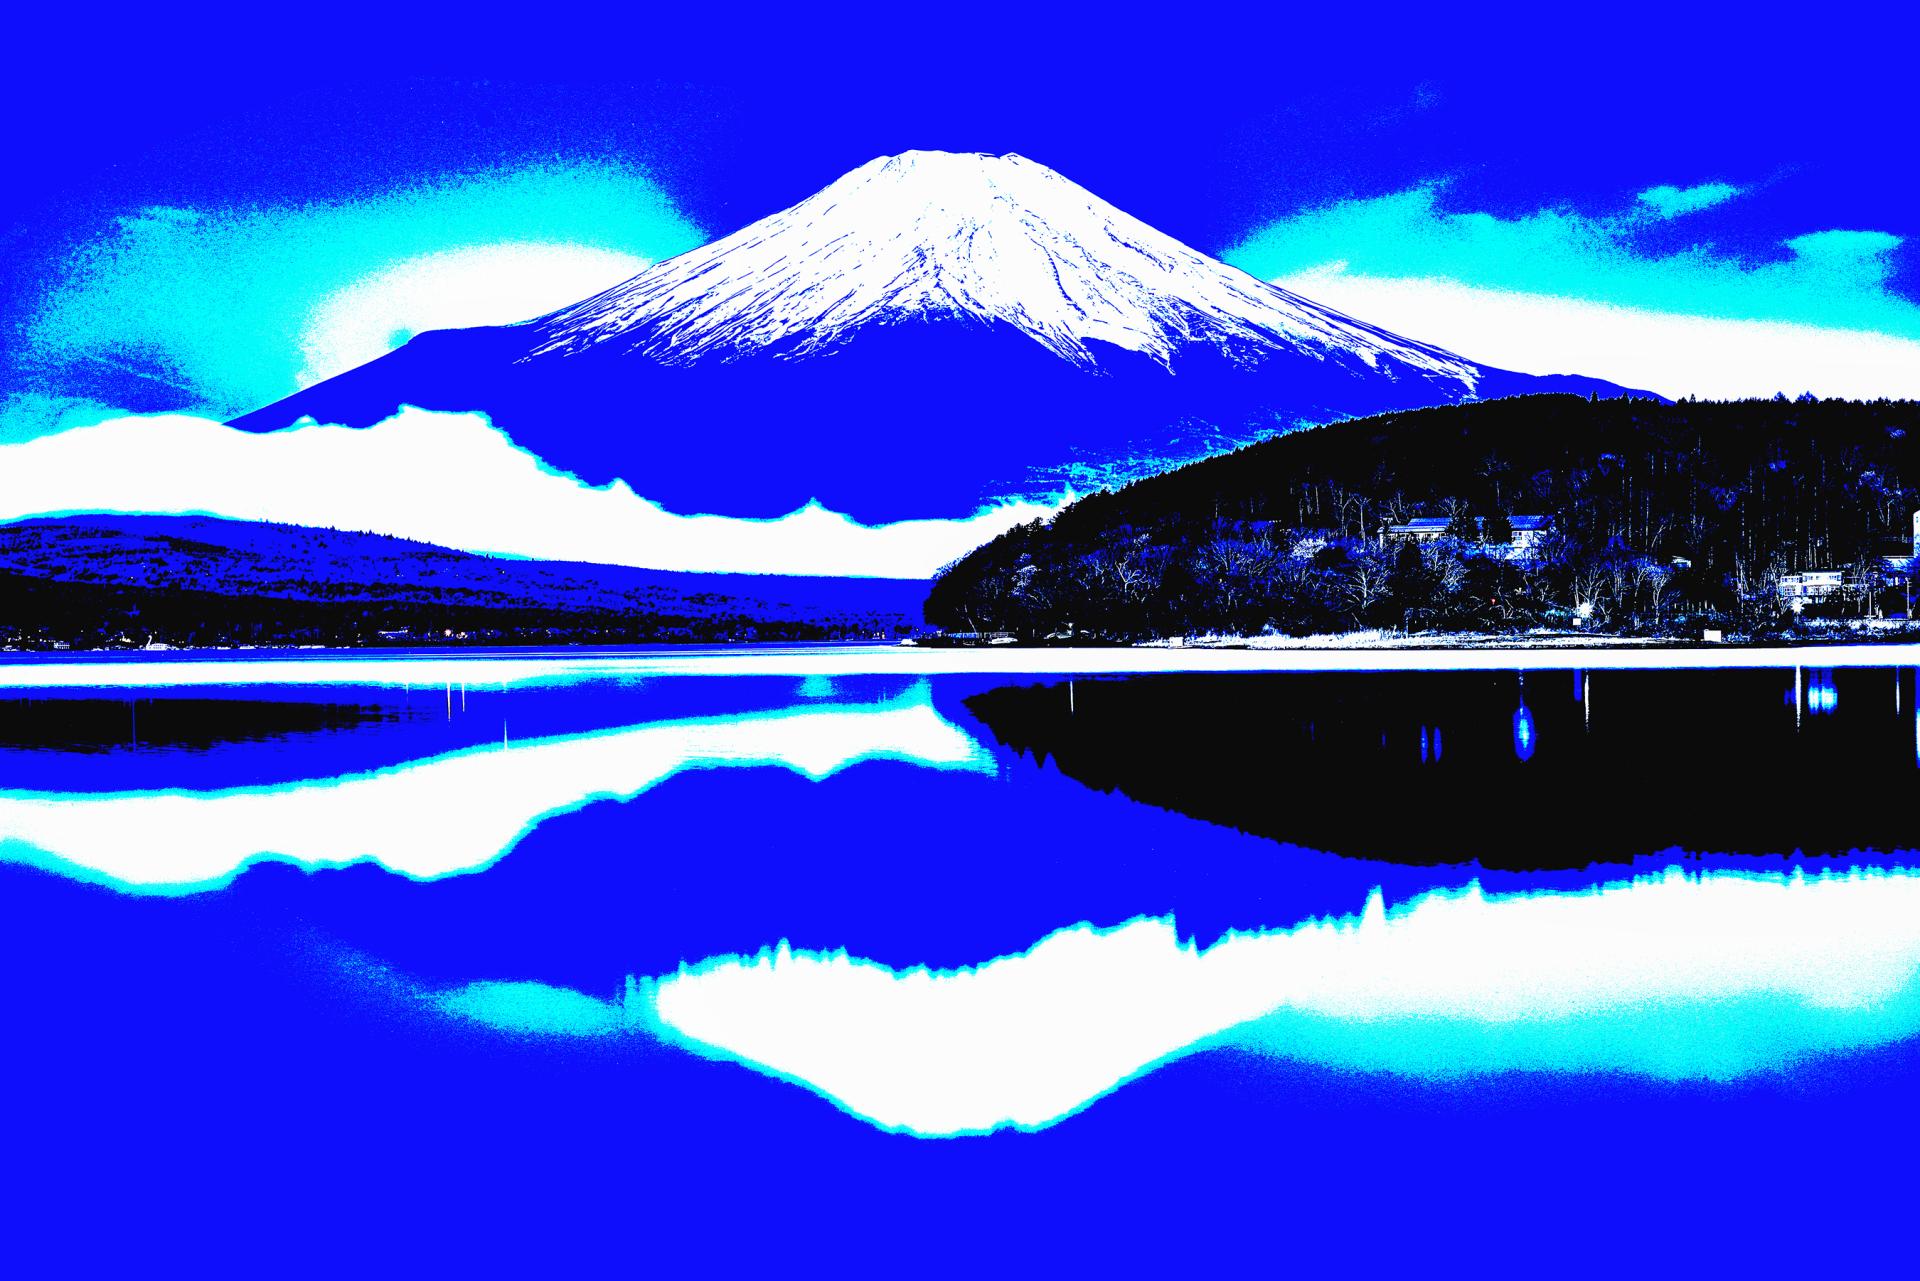 New York Photography Awards Winner - Print of Mount Fuji